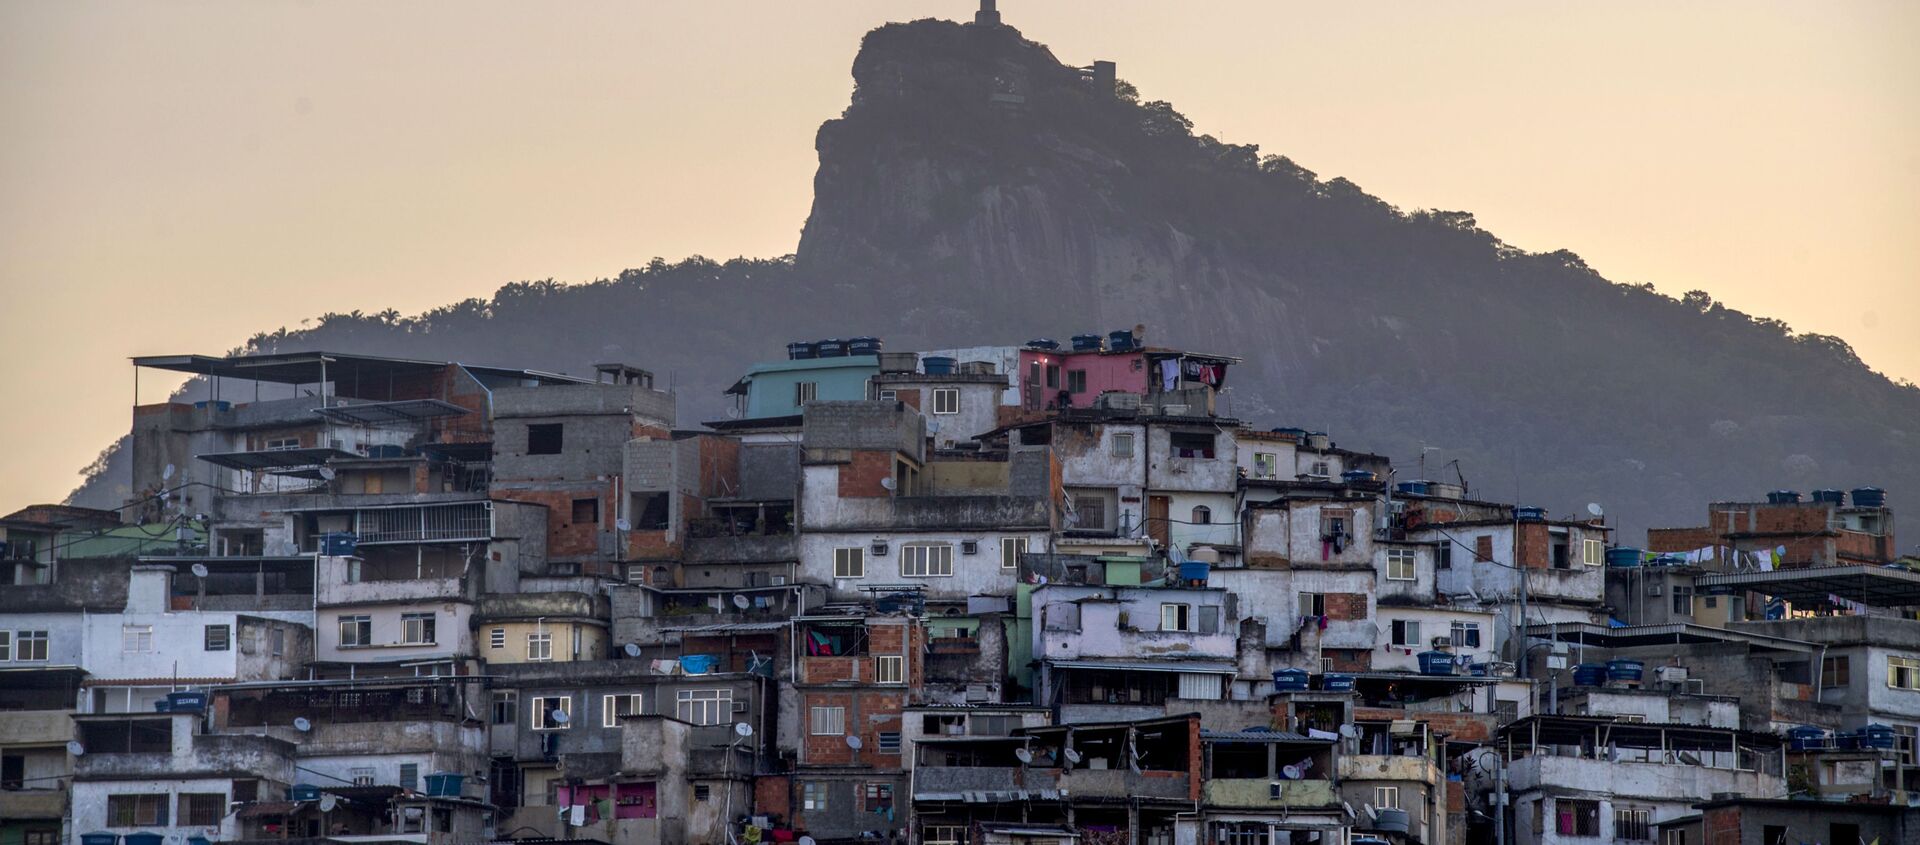 Una favela en Río de Janeiro, Brasil - Sputnik Mundo, 1920, 23.03.2020